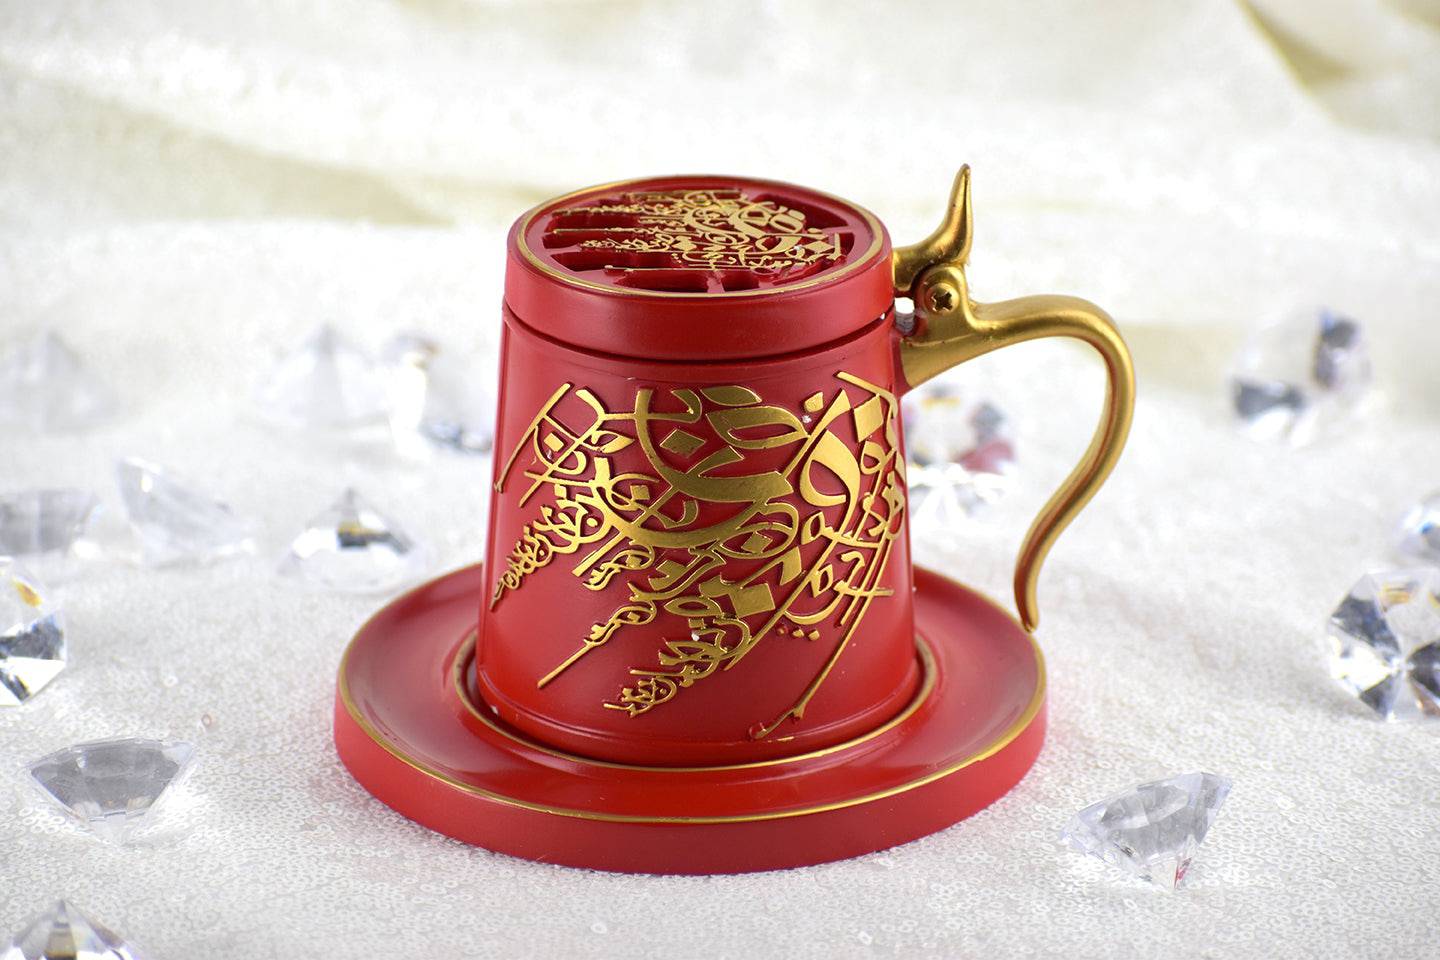 Tea Cup Style Closed Incense Bakhoor Burner - Red - Intense oud